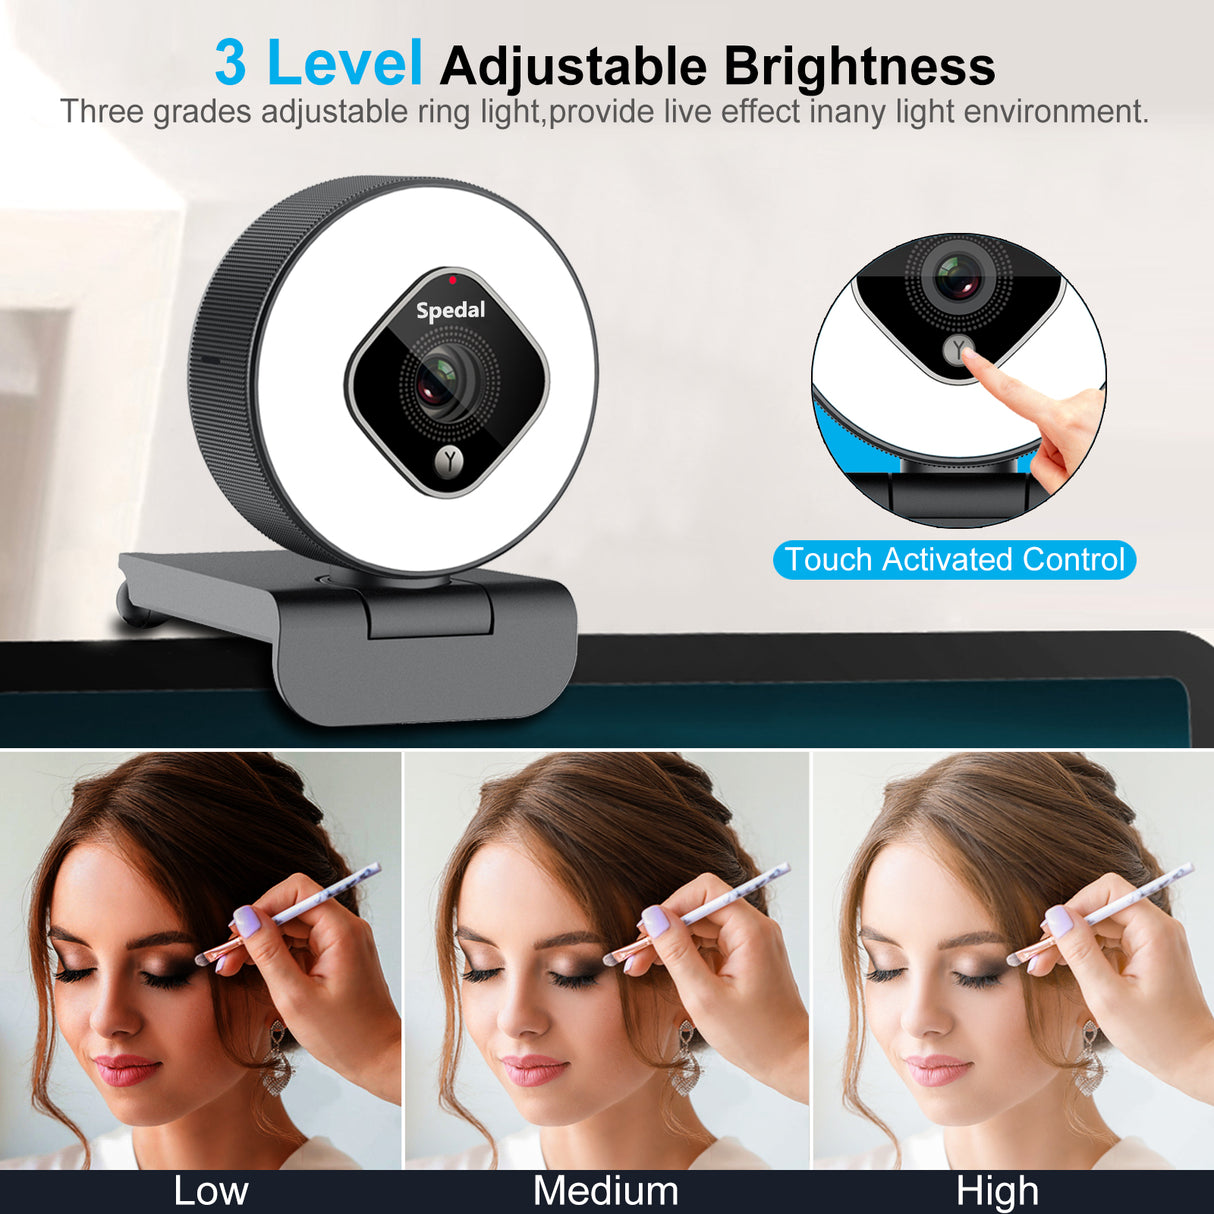 WebMic-HD-Pro | Webcam W/ Microphone + Ring Light | Movo